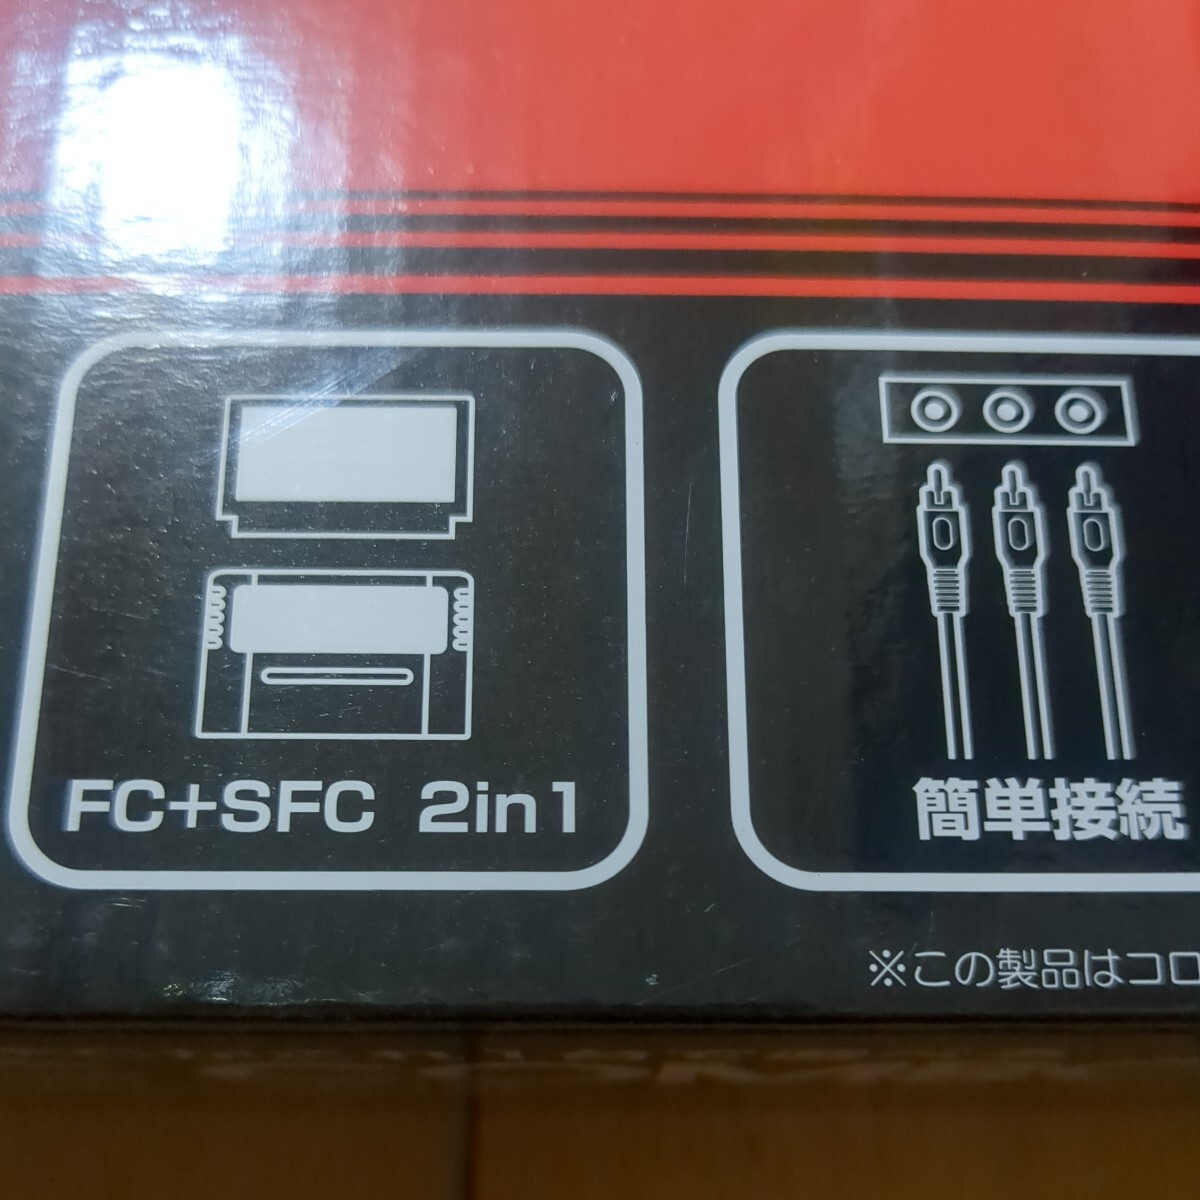 FC COMBO *efsi- combo FC SFC совместимый одеколон автобус Circle Famicom Super Famicom 